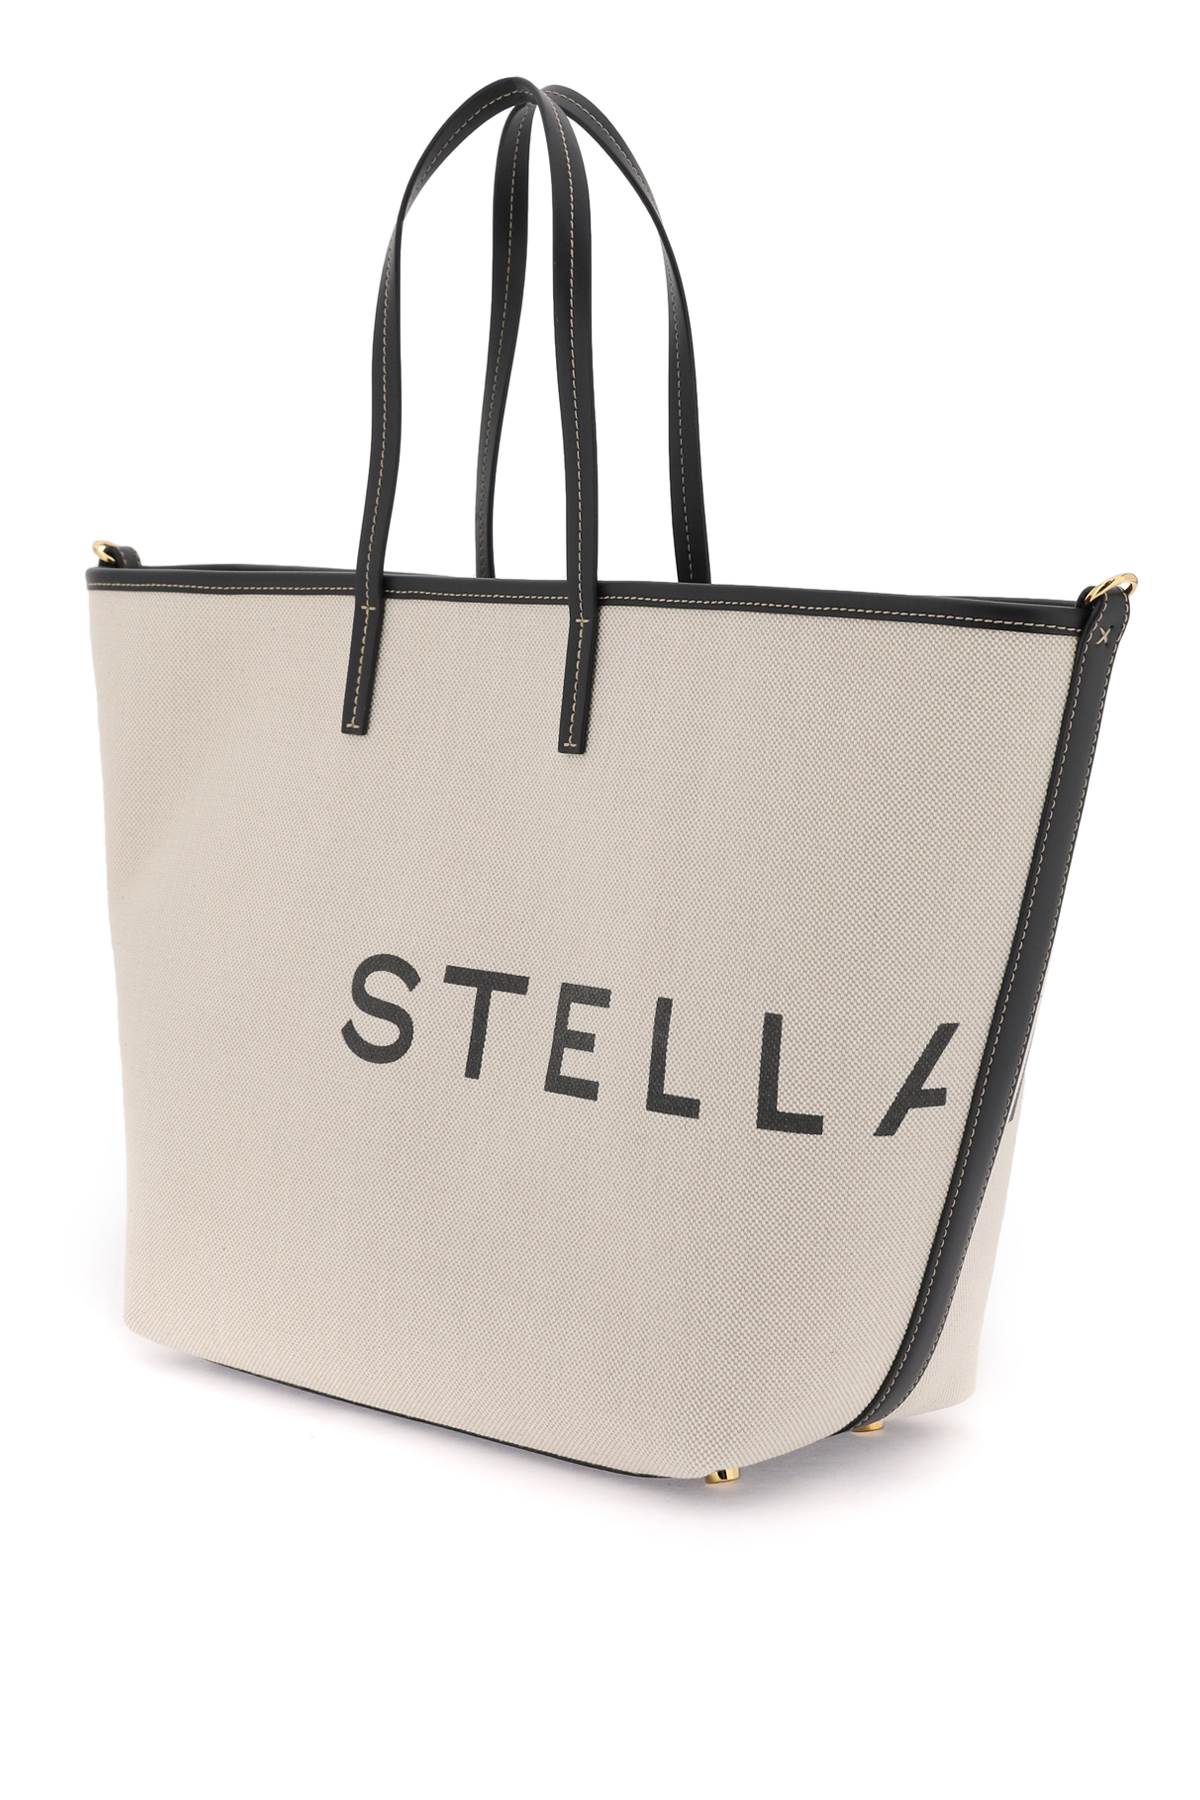 STELLA MCCARTNEY Beige Canvas Tote Handbag for Women